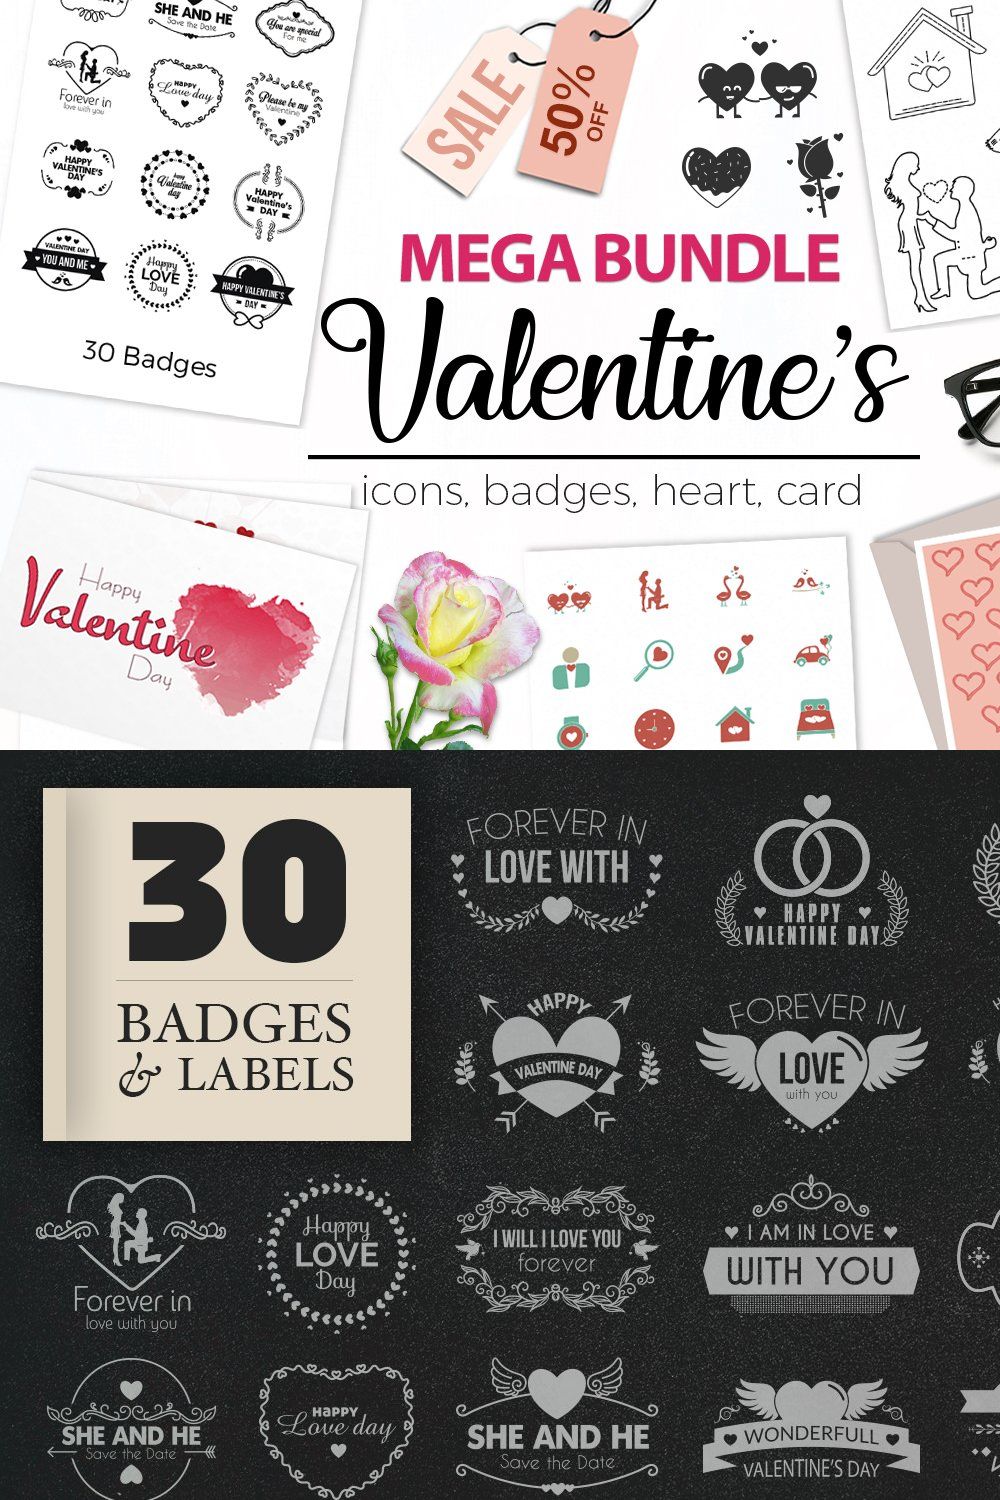 Valentines Designs Mega Bundle pinterest preview image.